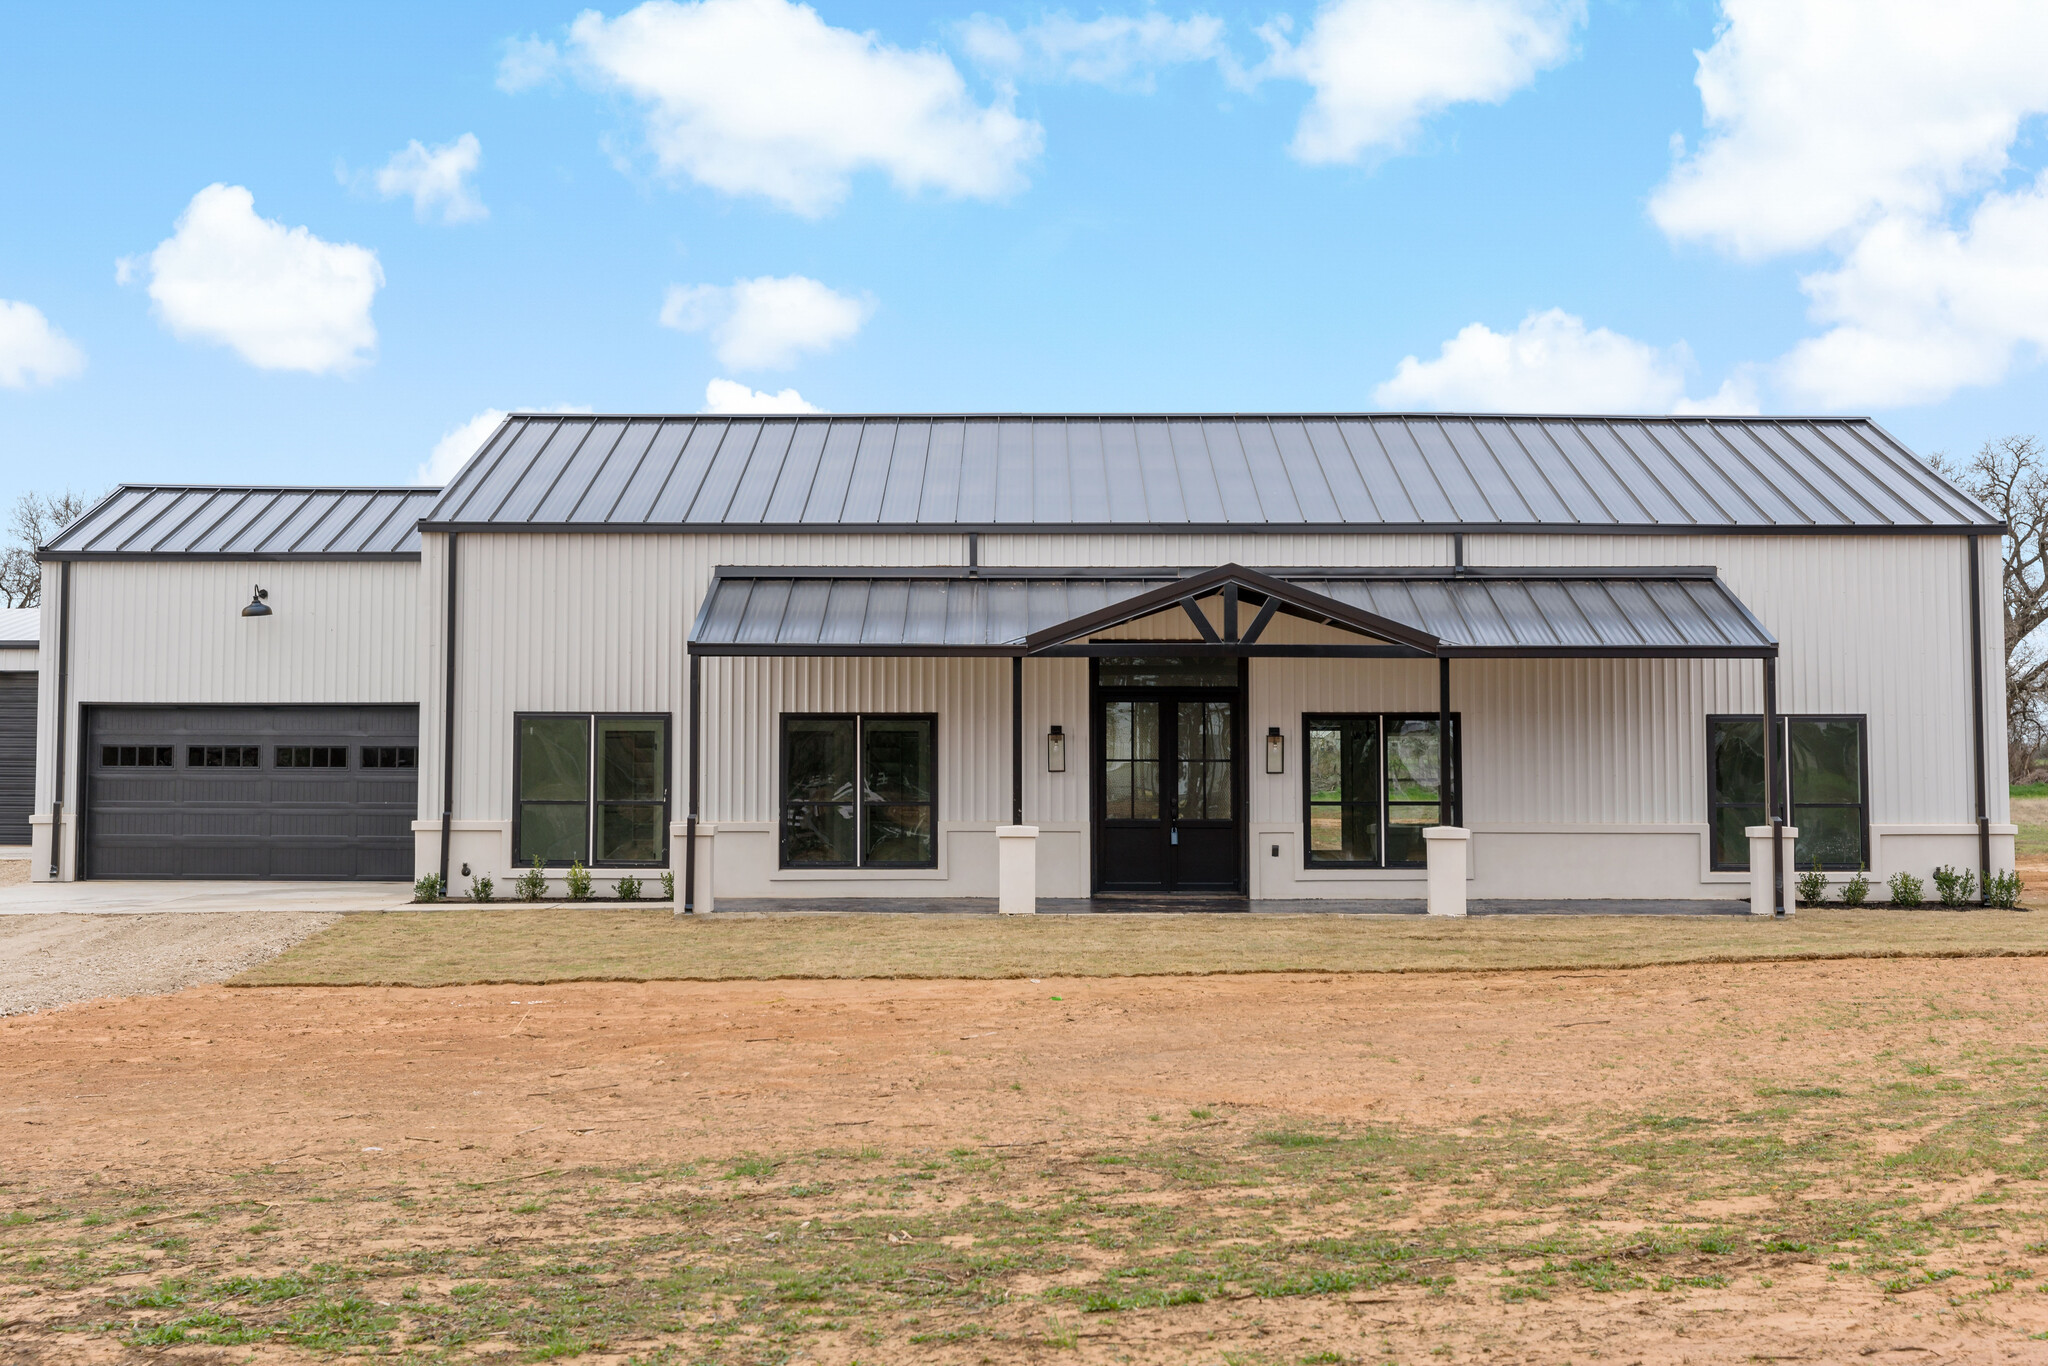 A brand new Barndominium on 1.756 acres in Alvarado, Texas for sale